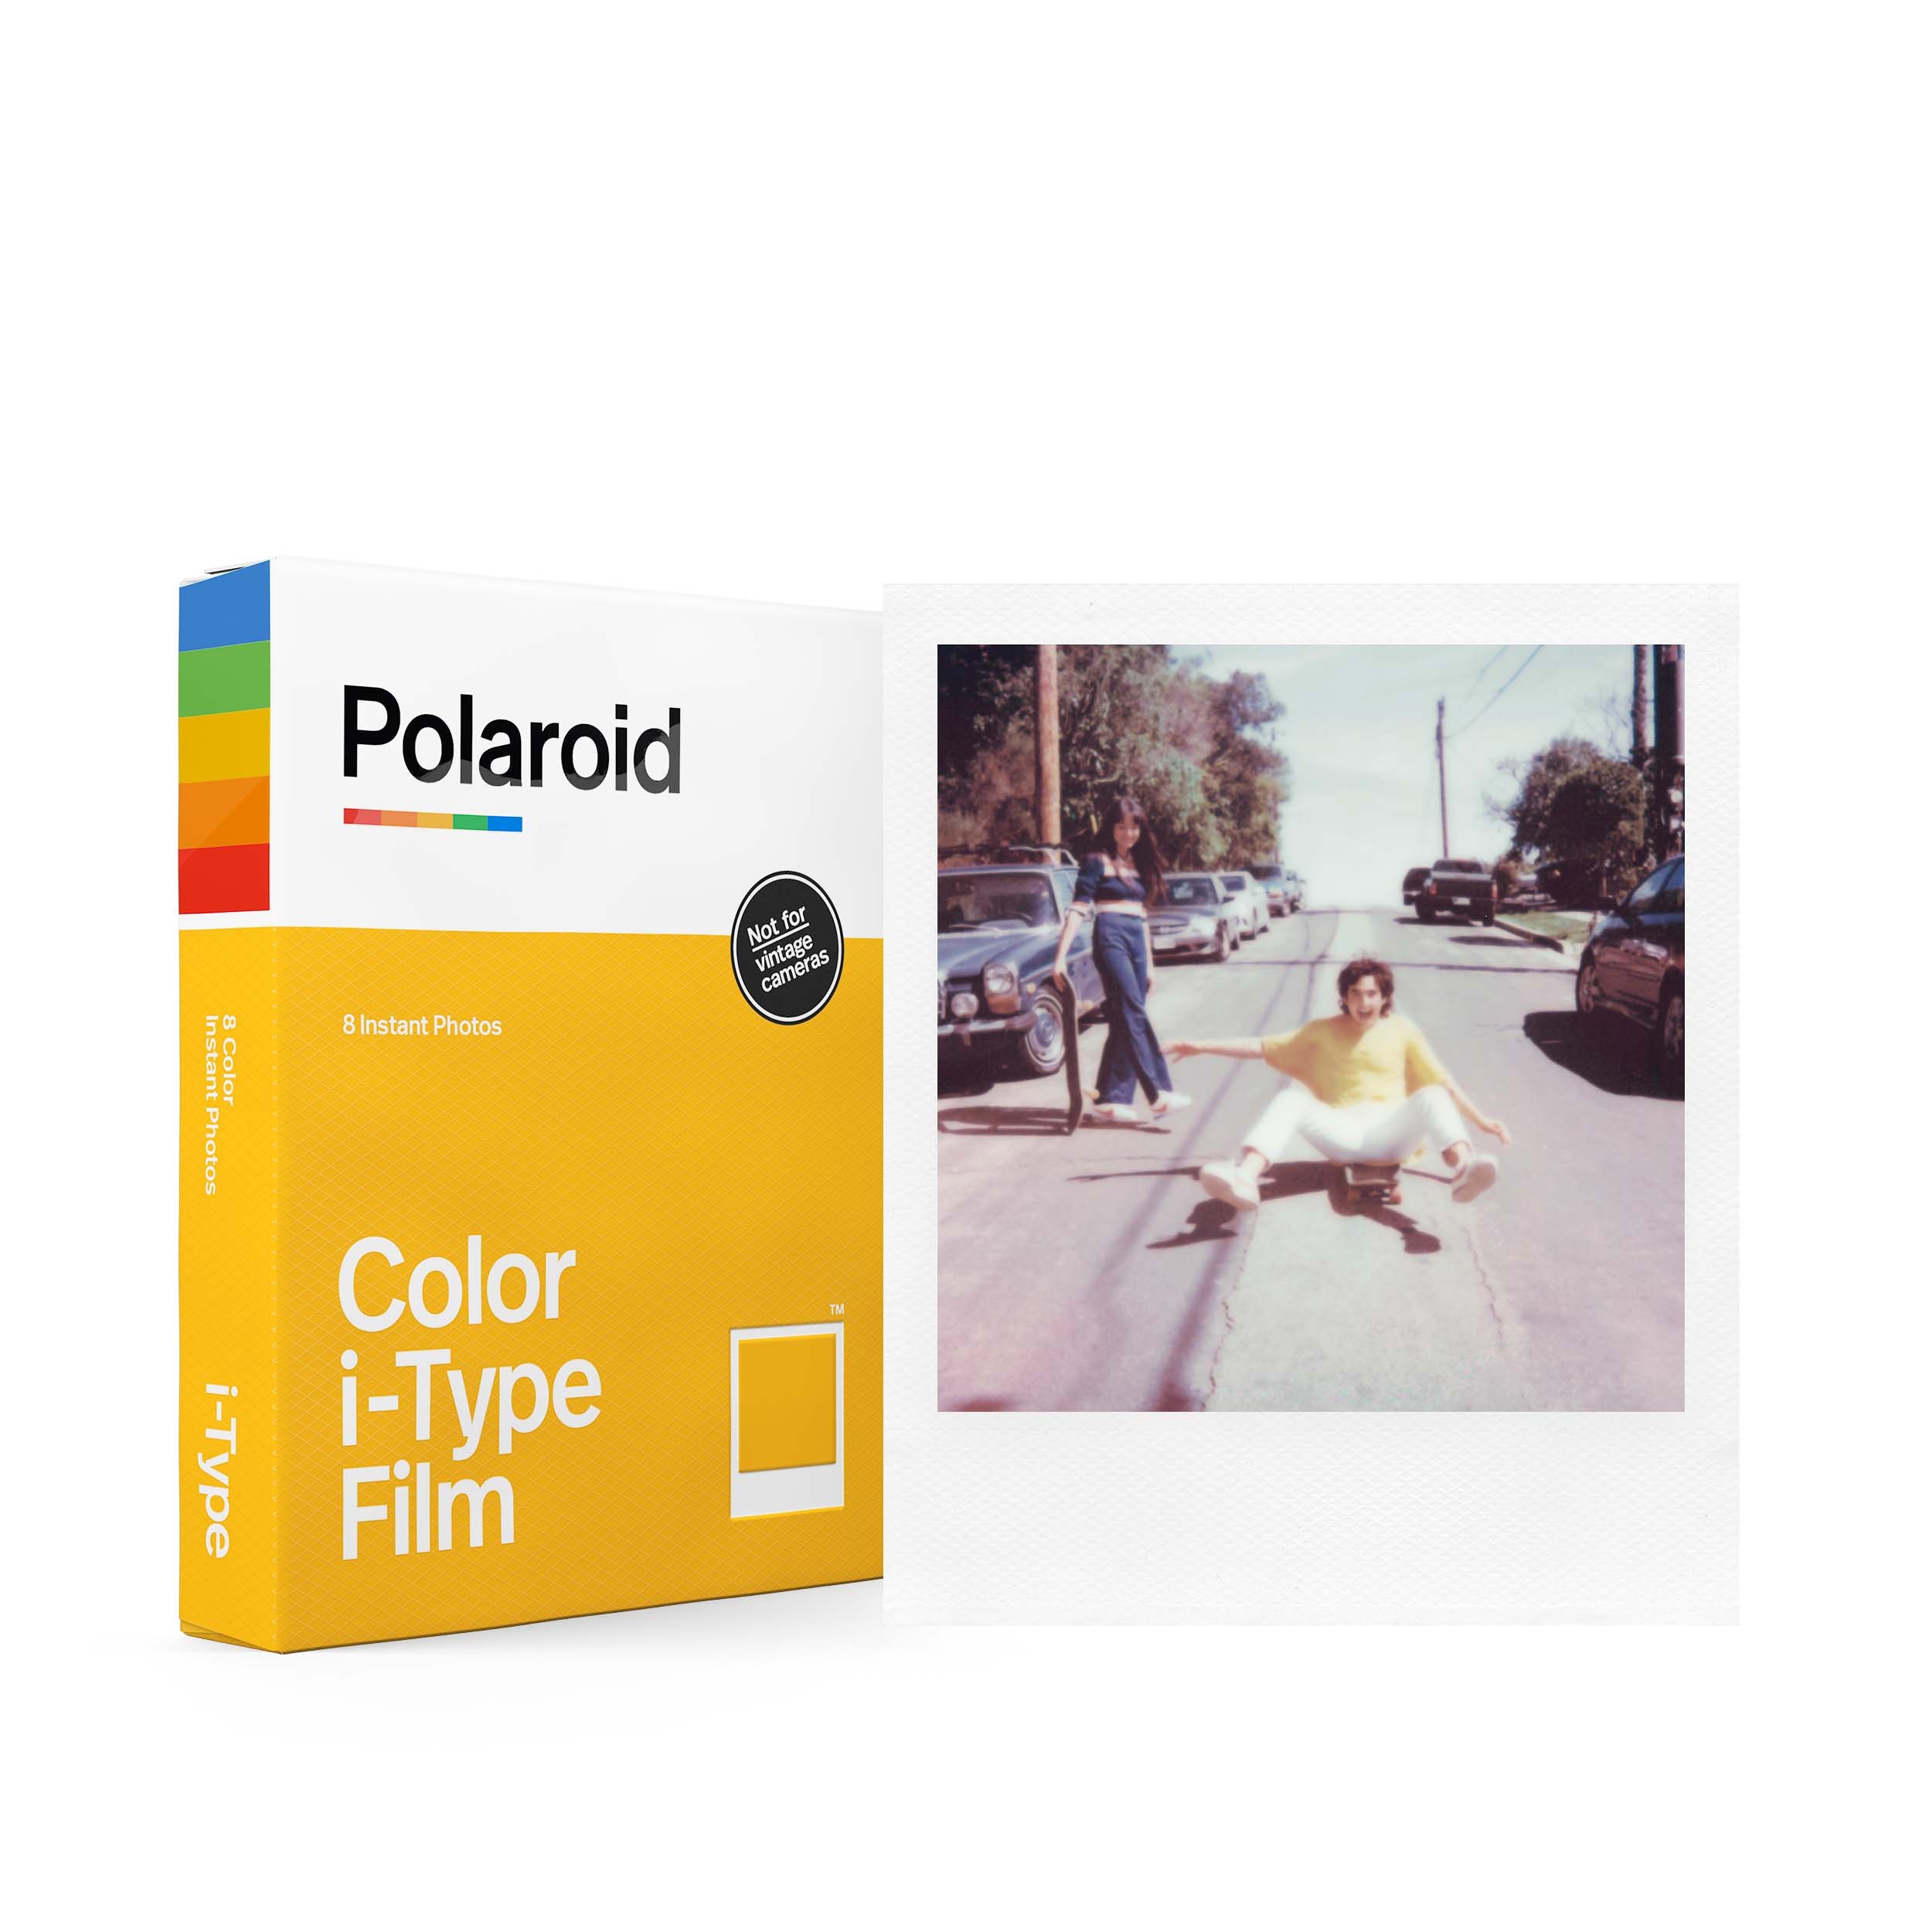 Polaroid Polaroid Originals Film Couleur Pour Appareil Photo